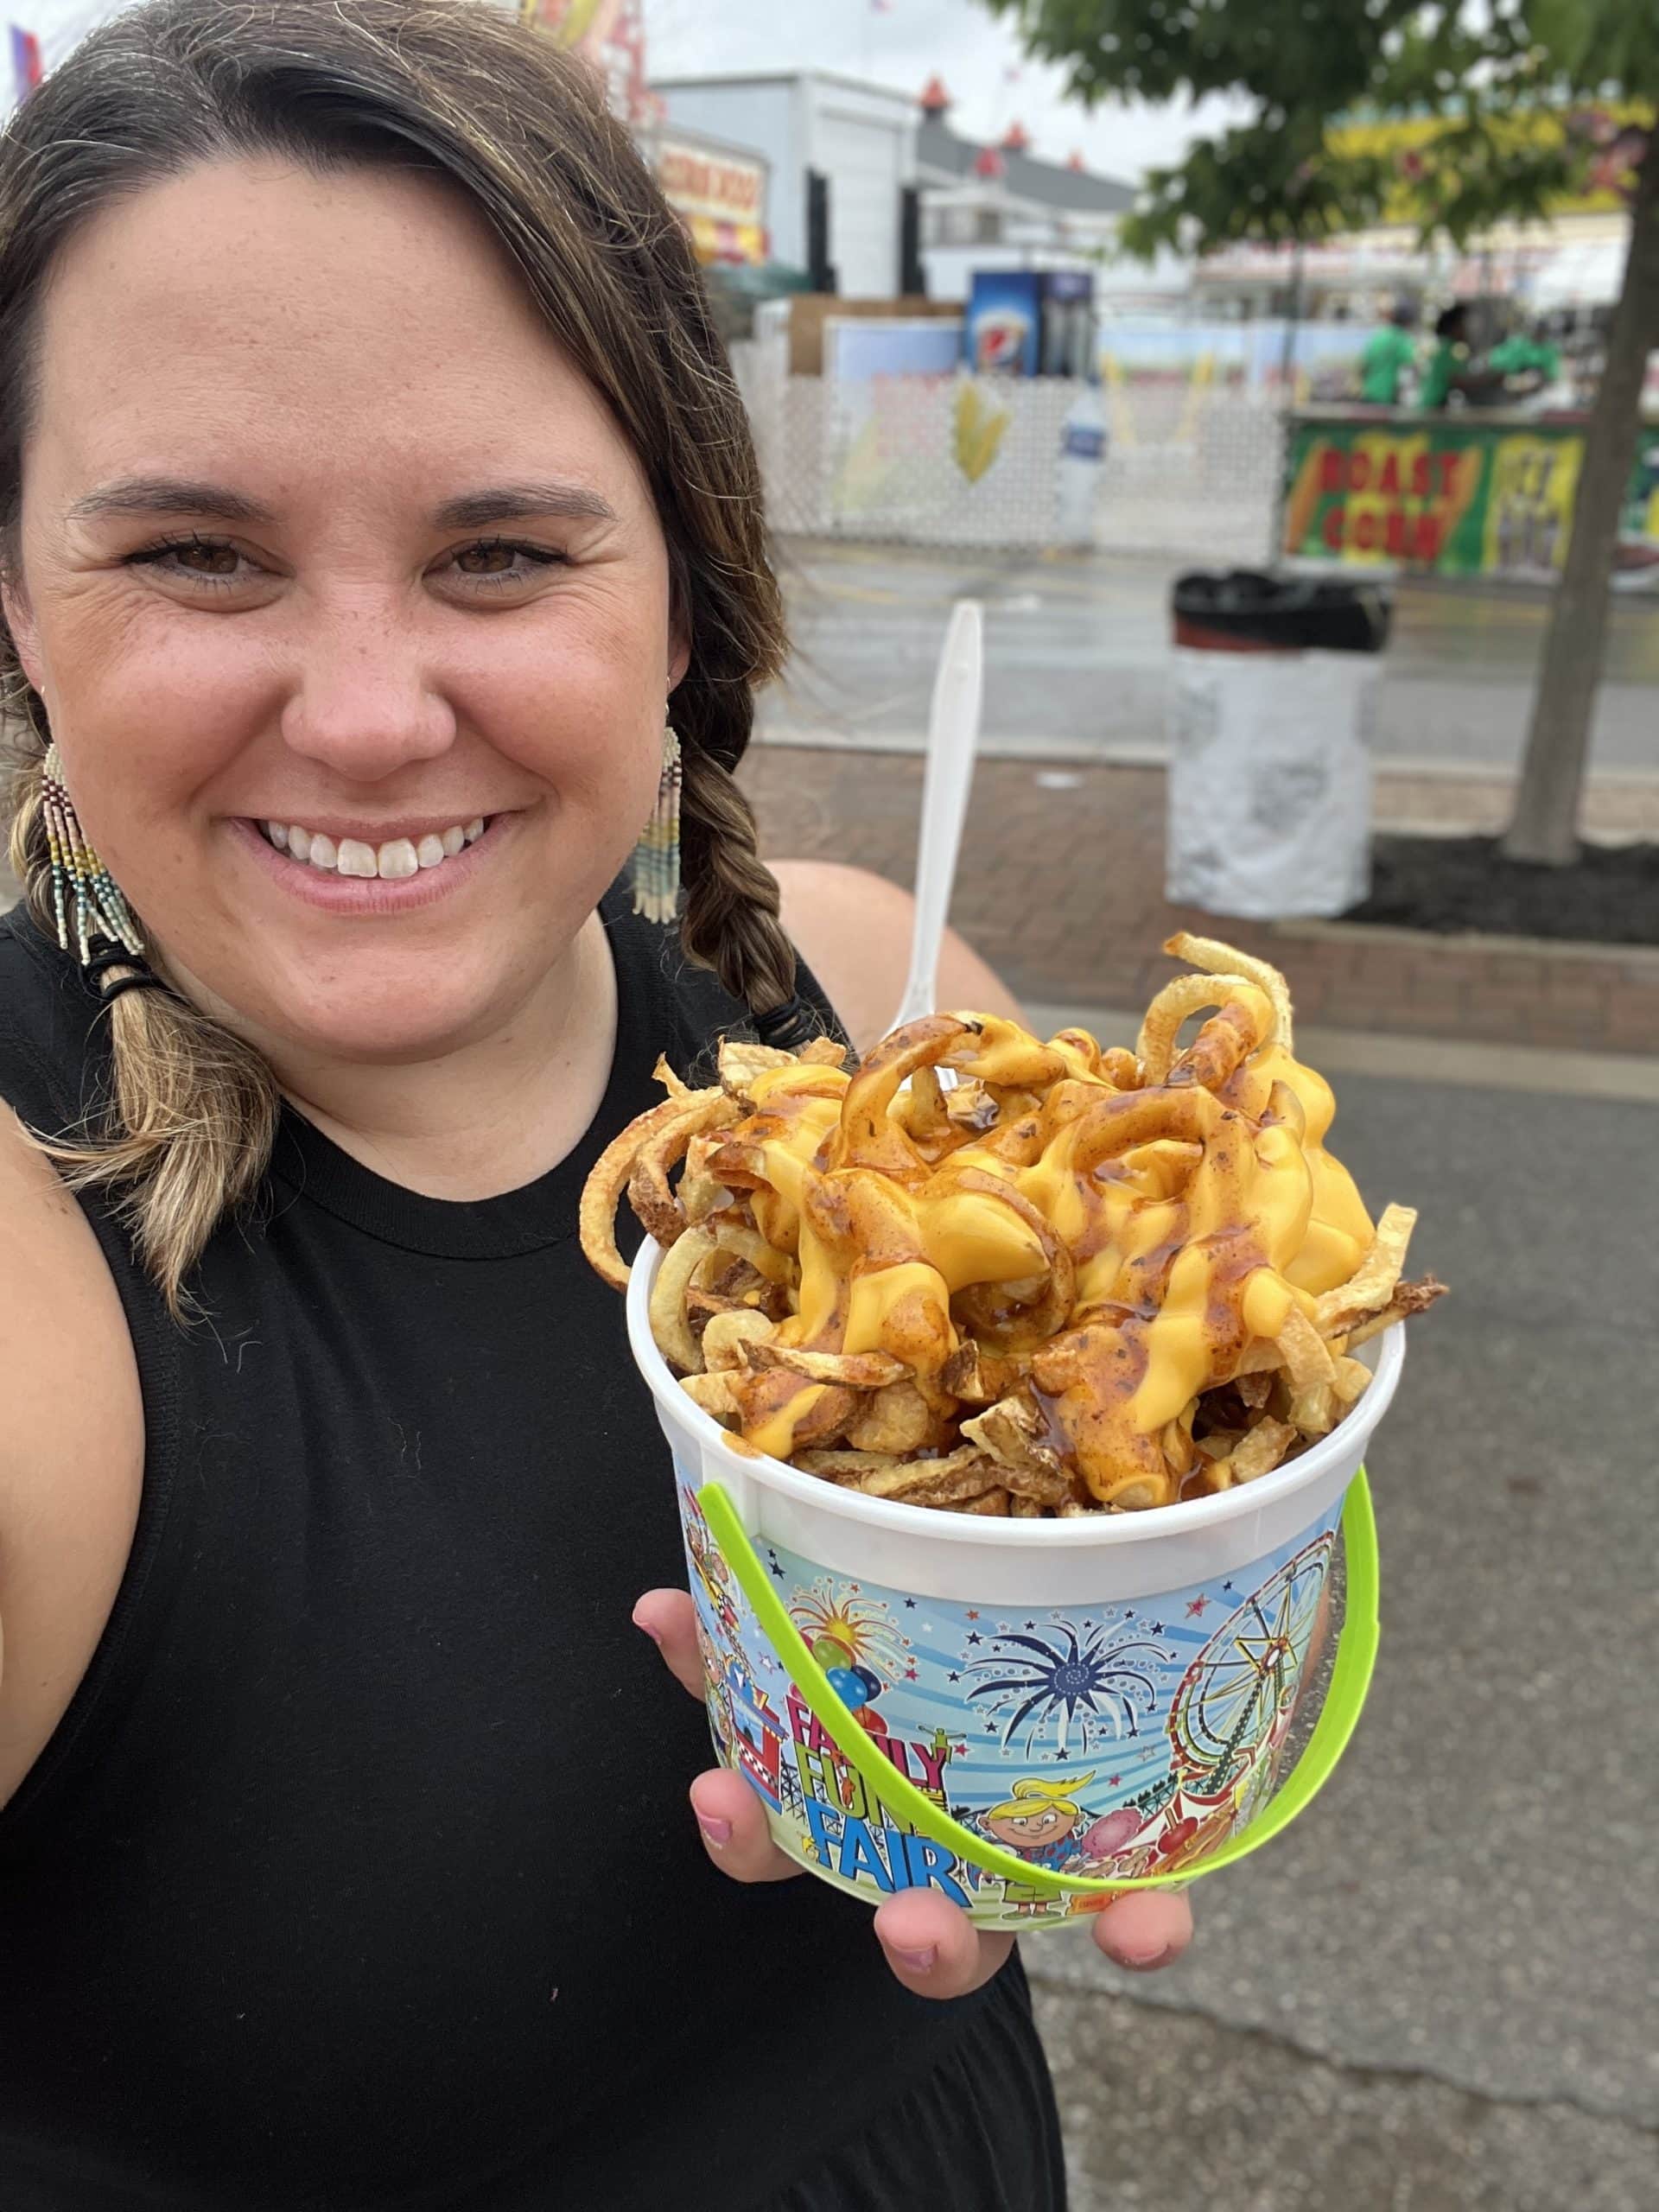 woman enjoying cheese fries at the Ohio State Fair.